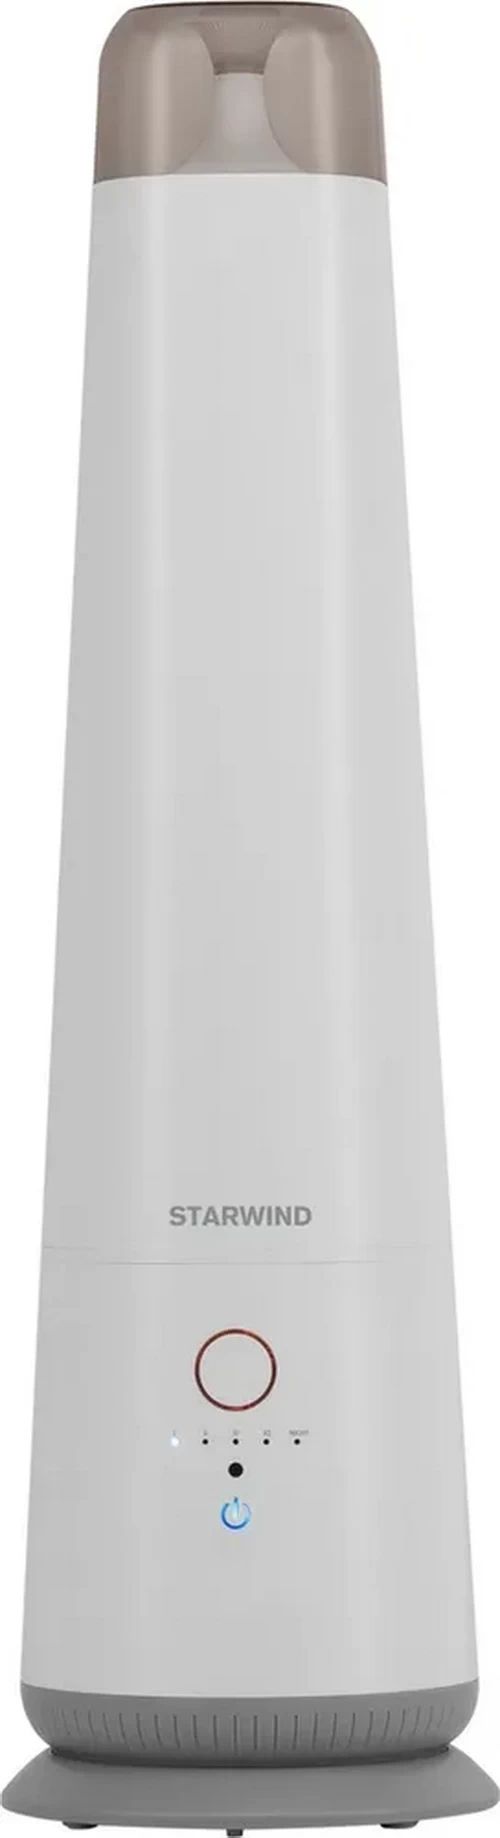 Воздухоувлажнитель STARWIND SHC1550 белый воздухоувлажнитель starwind shc1525 white grey